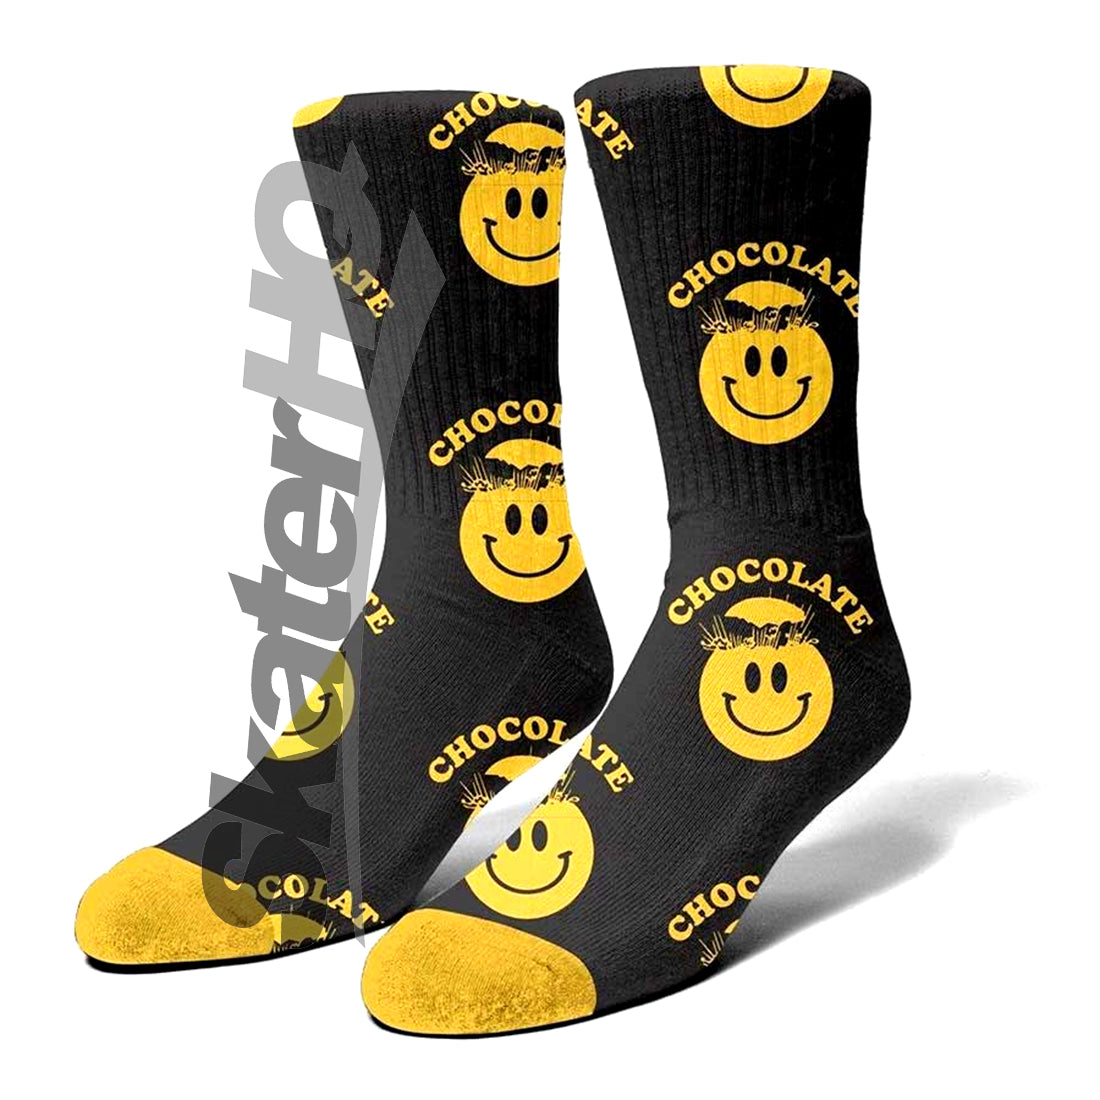 Chocolate Mind Blower Socks - Black/Yellow Apparel Socks